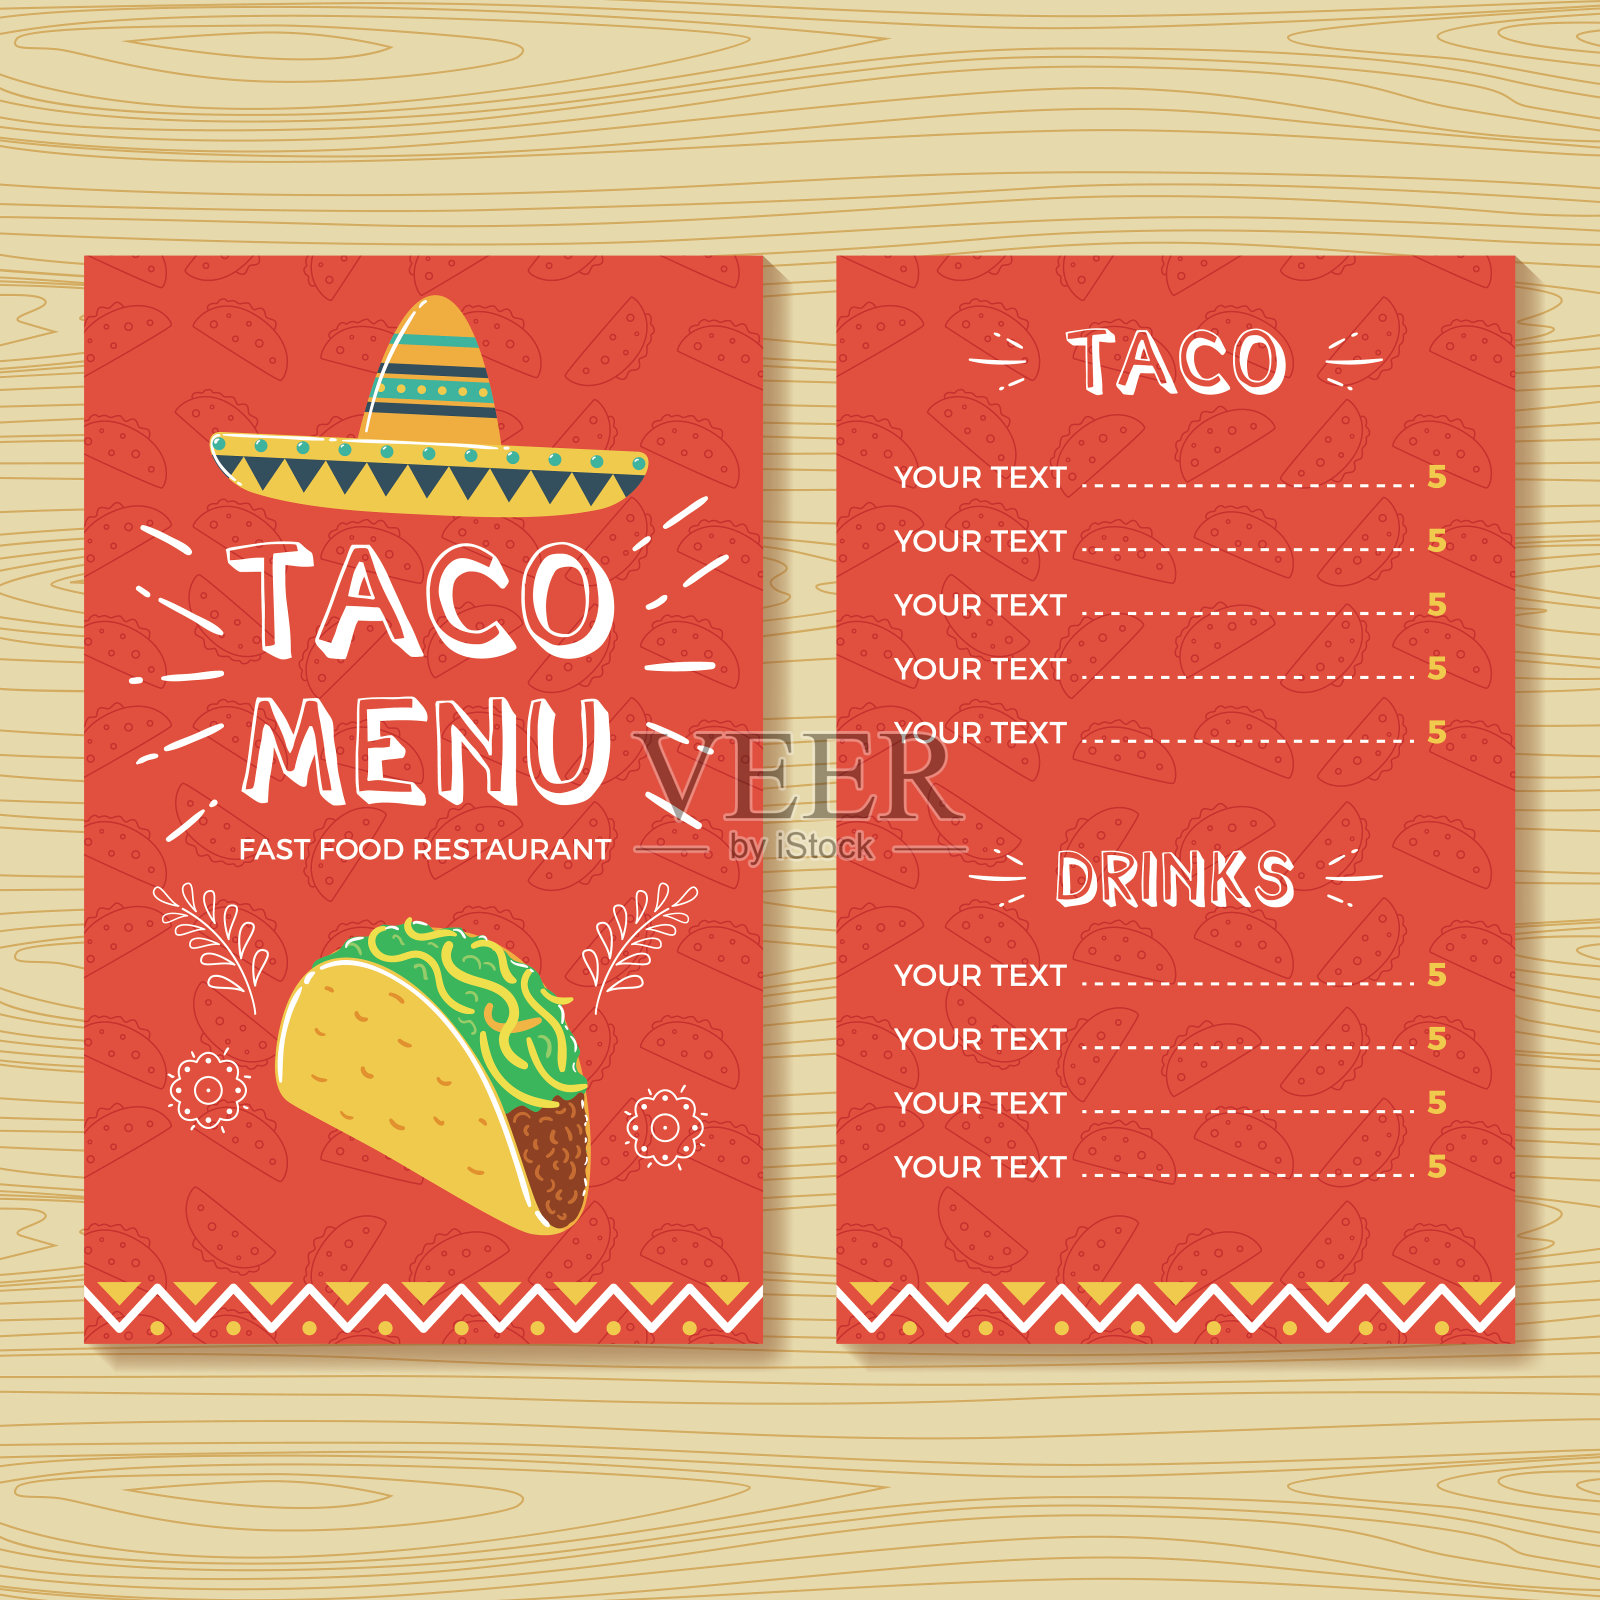 Taco菜单模板设计模板素材